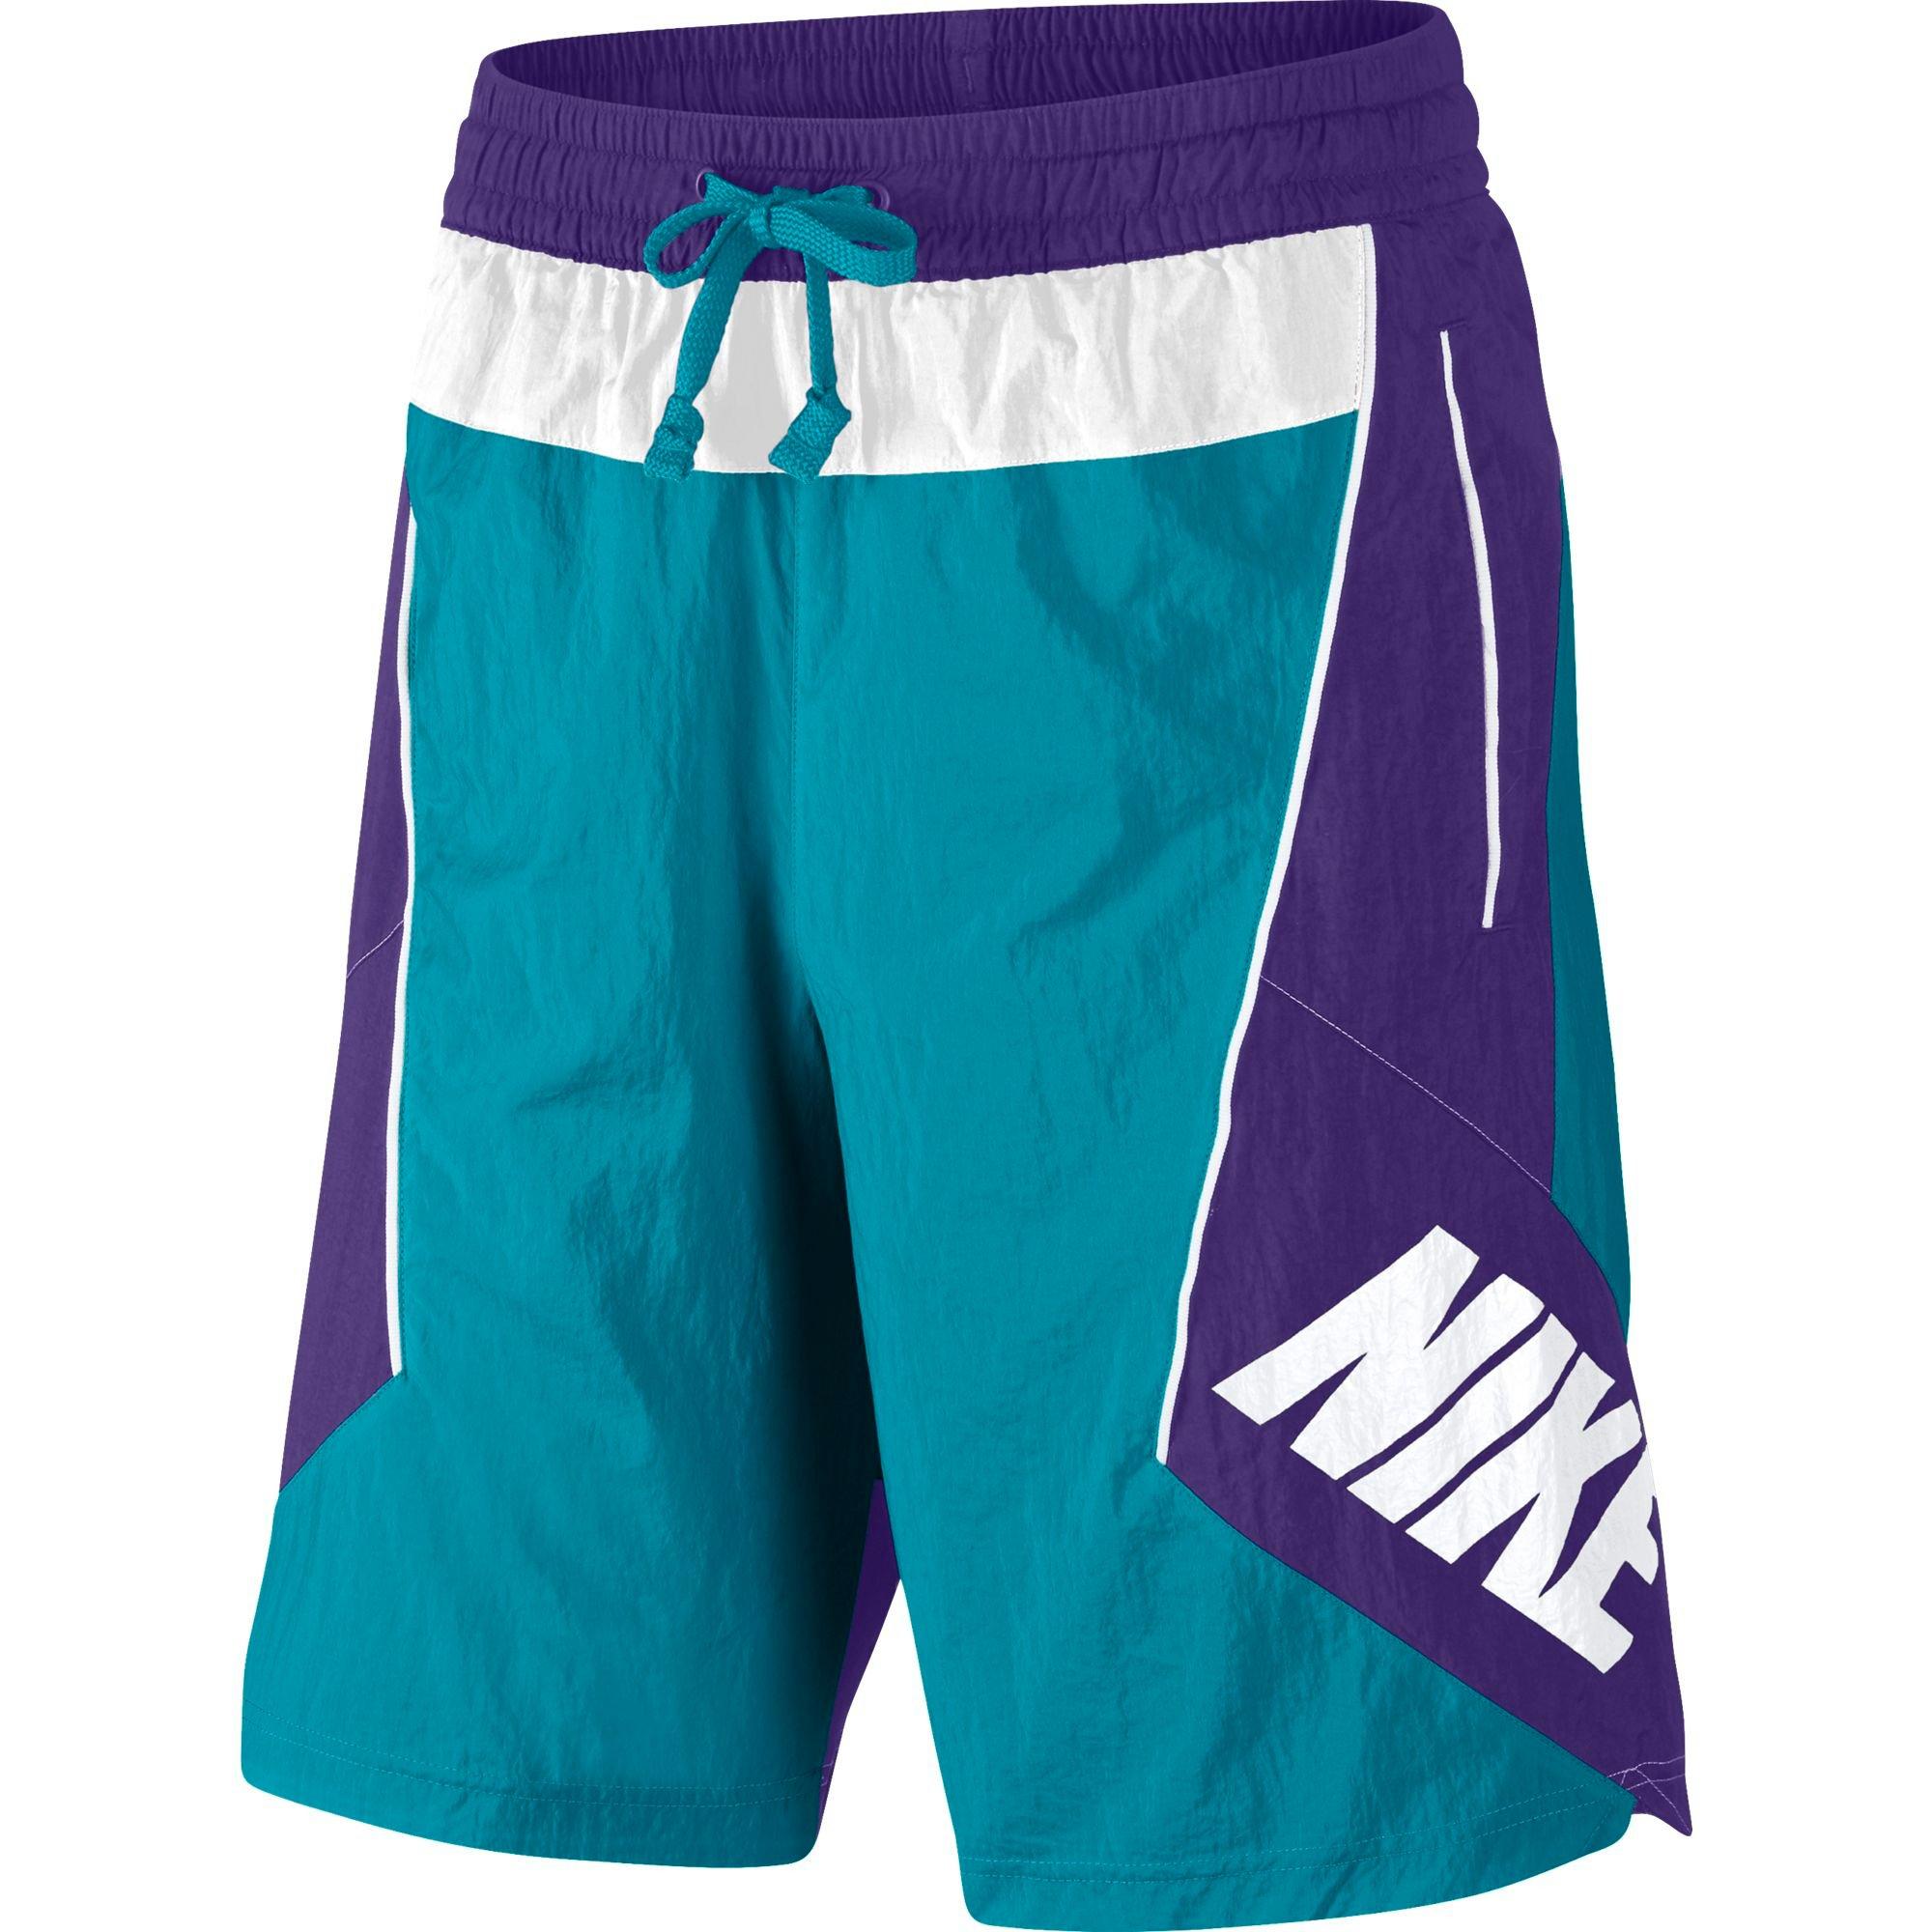 blue and purple nike shorts